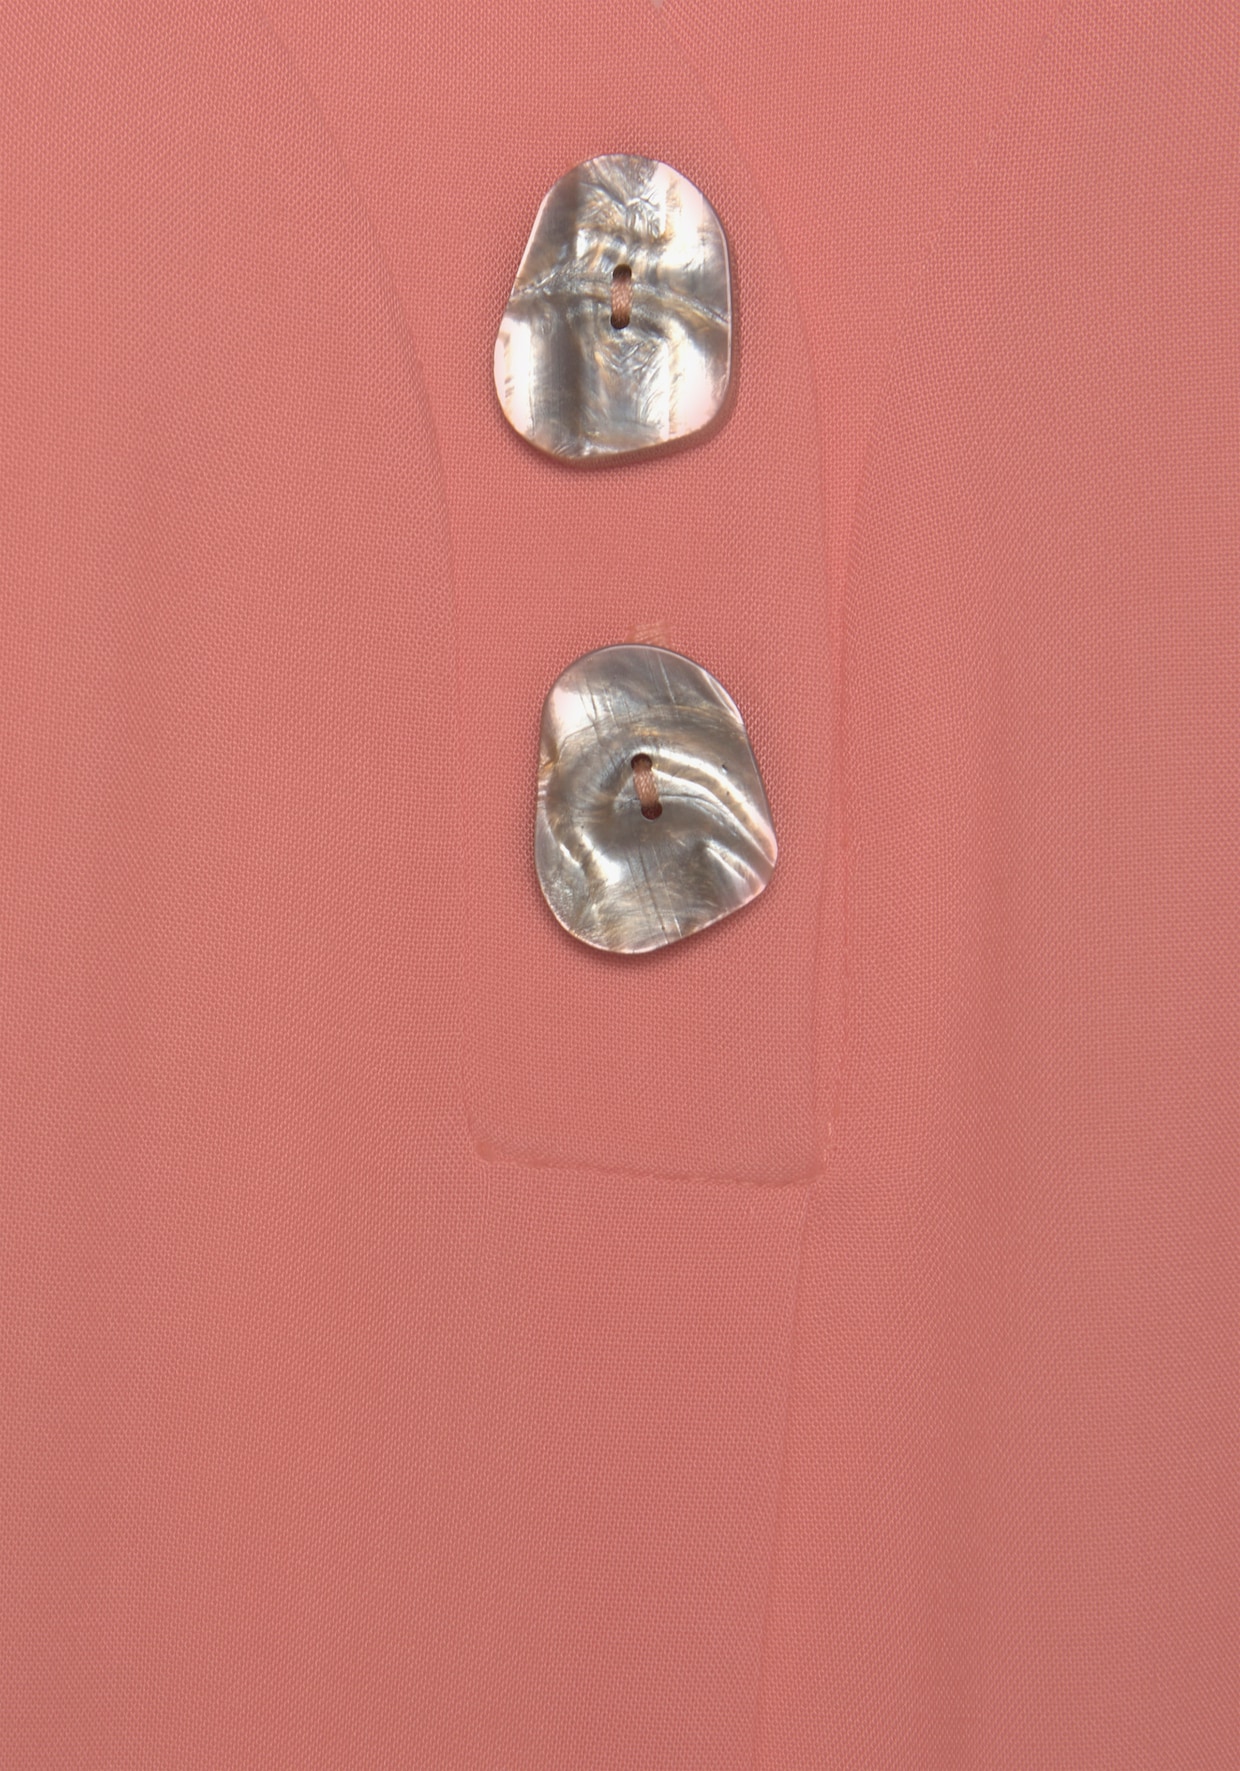 LASCANA Comfortabele blouse - peach